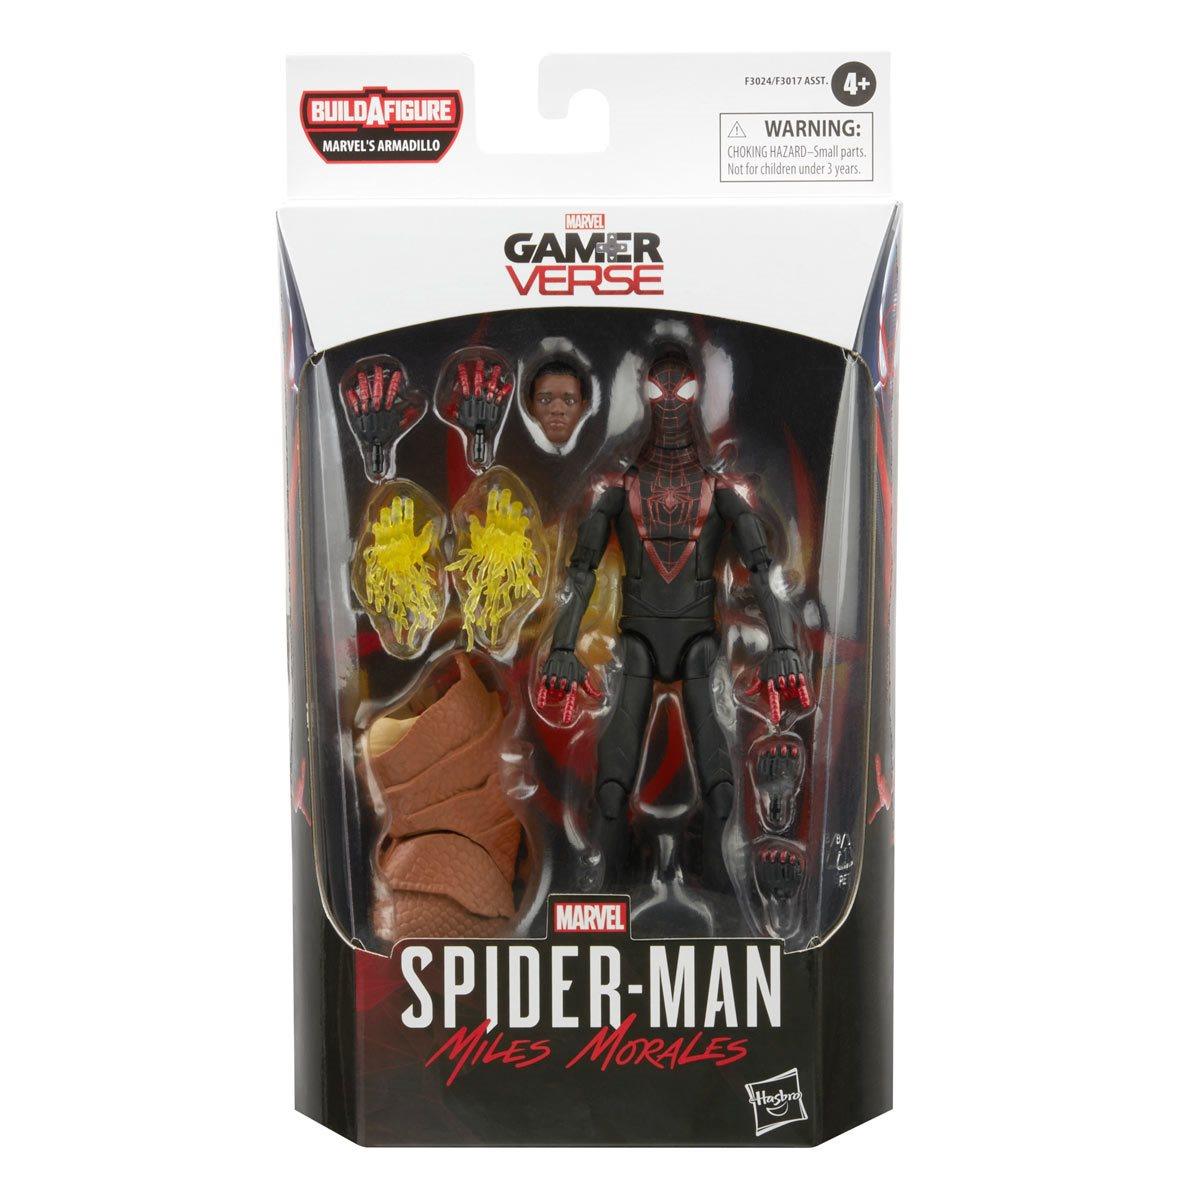 Spider-Man 3 Marvel Legends Miles Morales 6-Inch Action Figure - Emmett's ToyStop